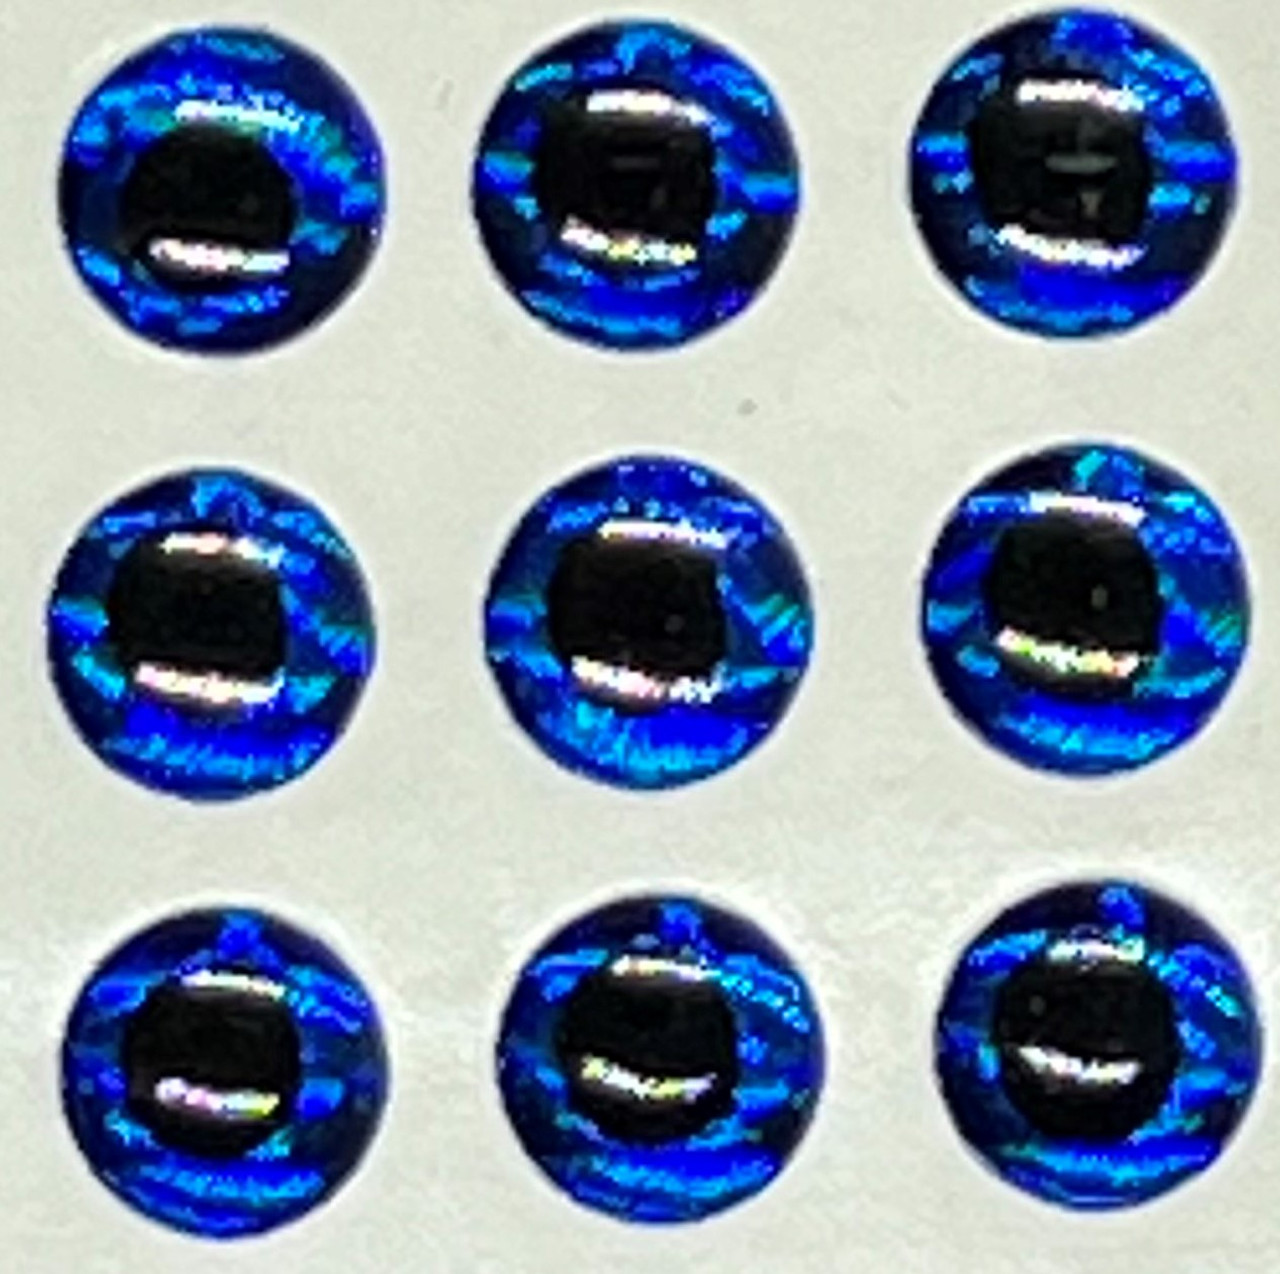 4 mm 3D lure eyes - Blue/Black Pupil